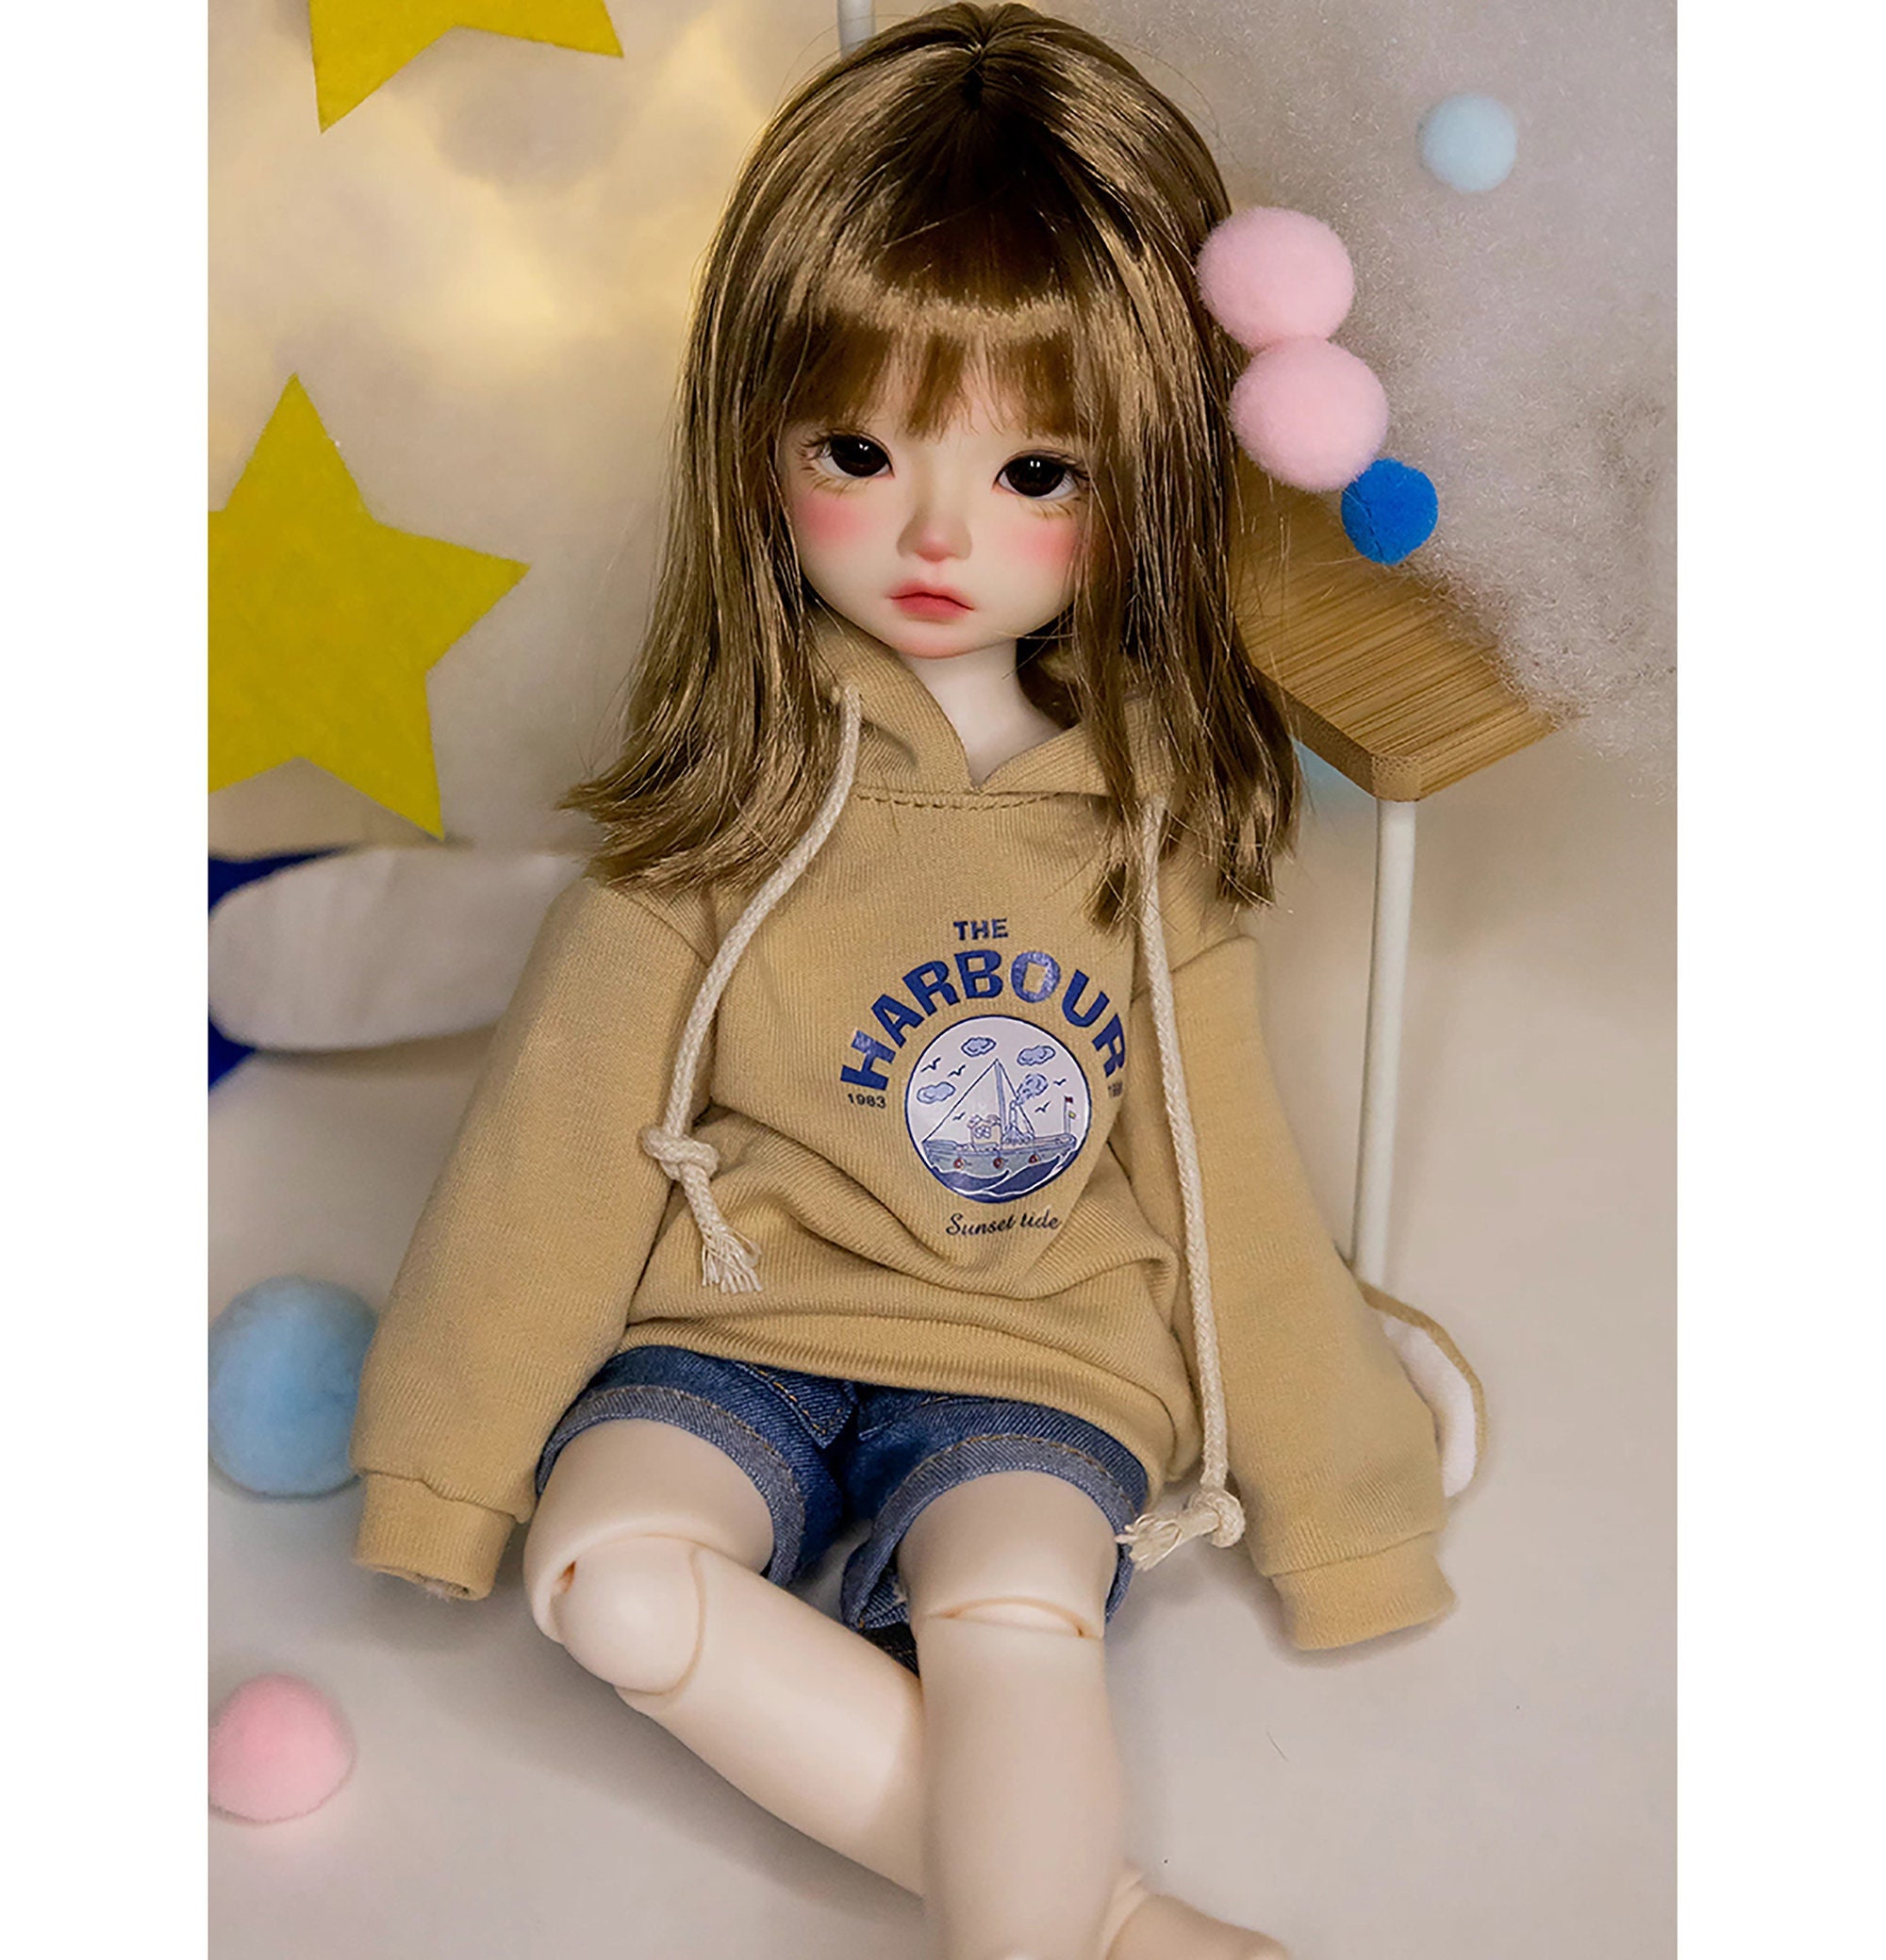 Adorable Sweet Girl Bjd Doll,elegant Handmade Full Set Bjd Doll,white Dress  Suit Bjd Doll,stylish Toy 1/6 BJD Doll,joints Doll With Gift Box 